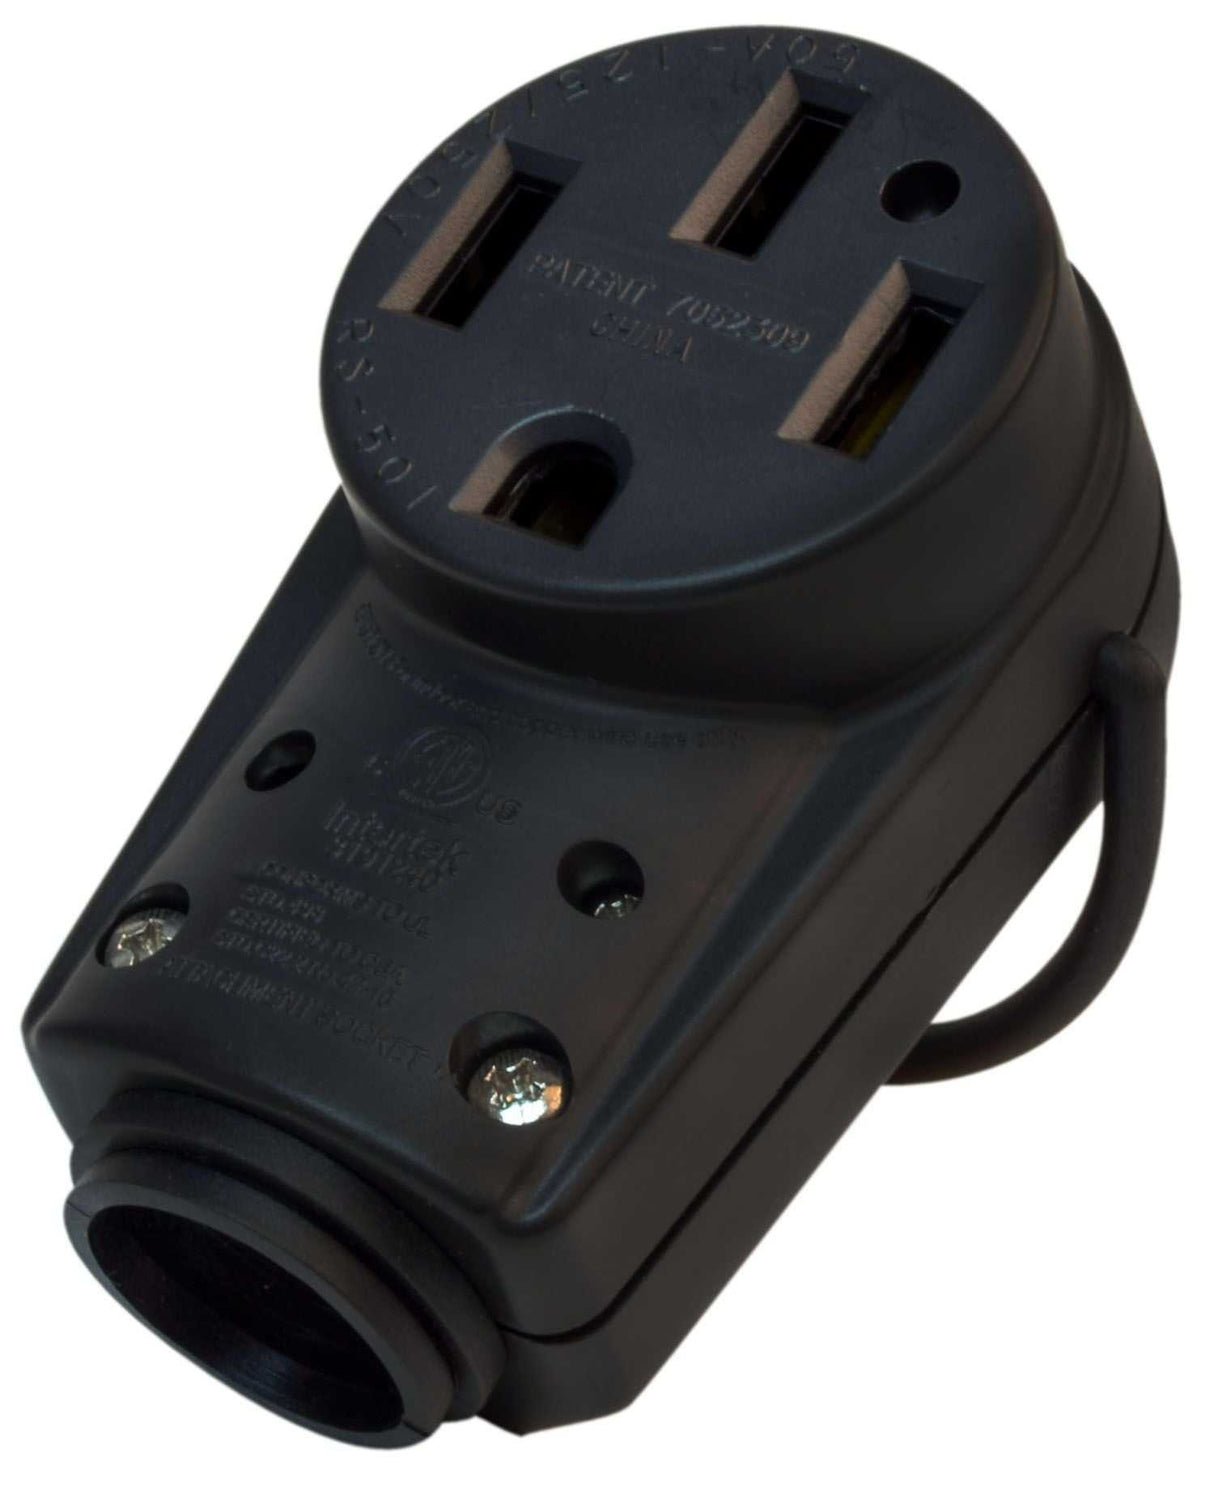 A10-R50VP Power Cord Plug End